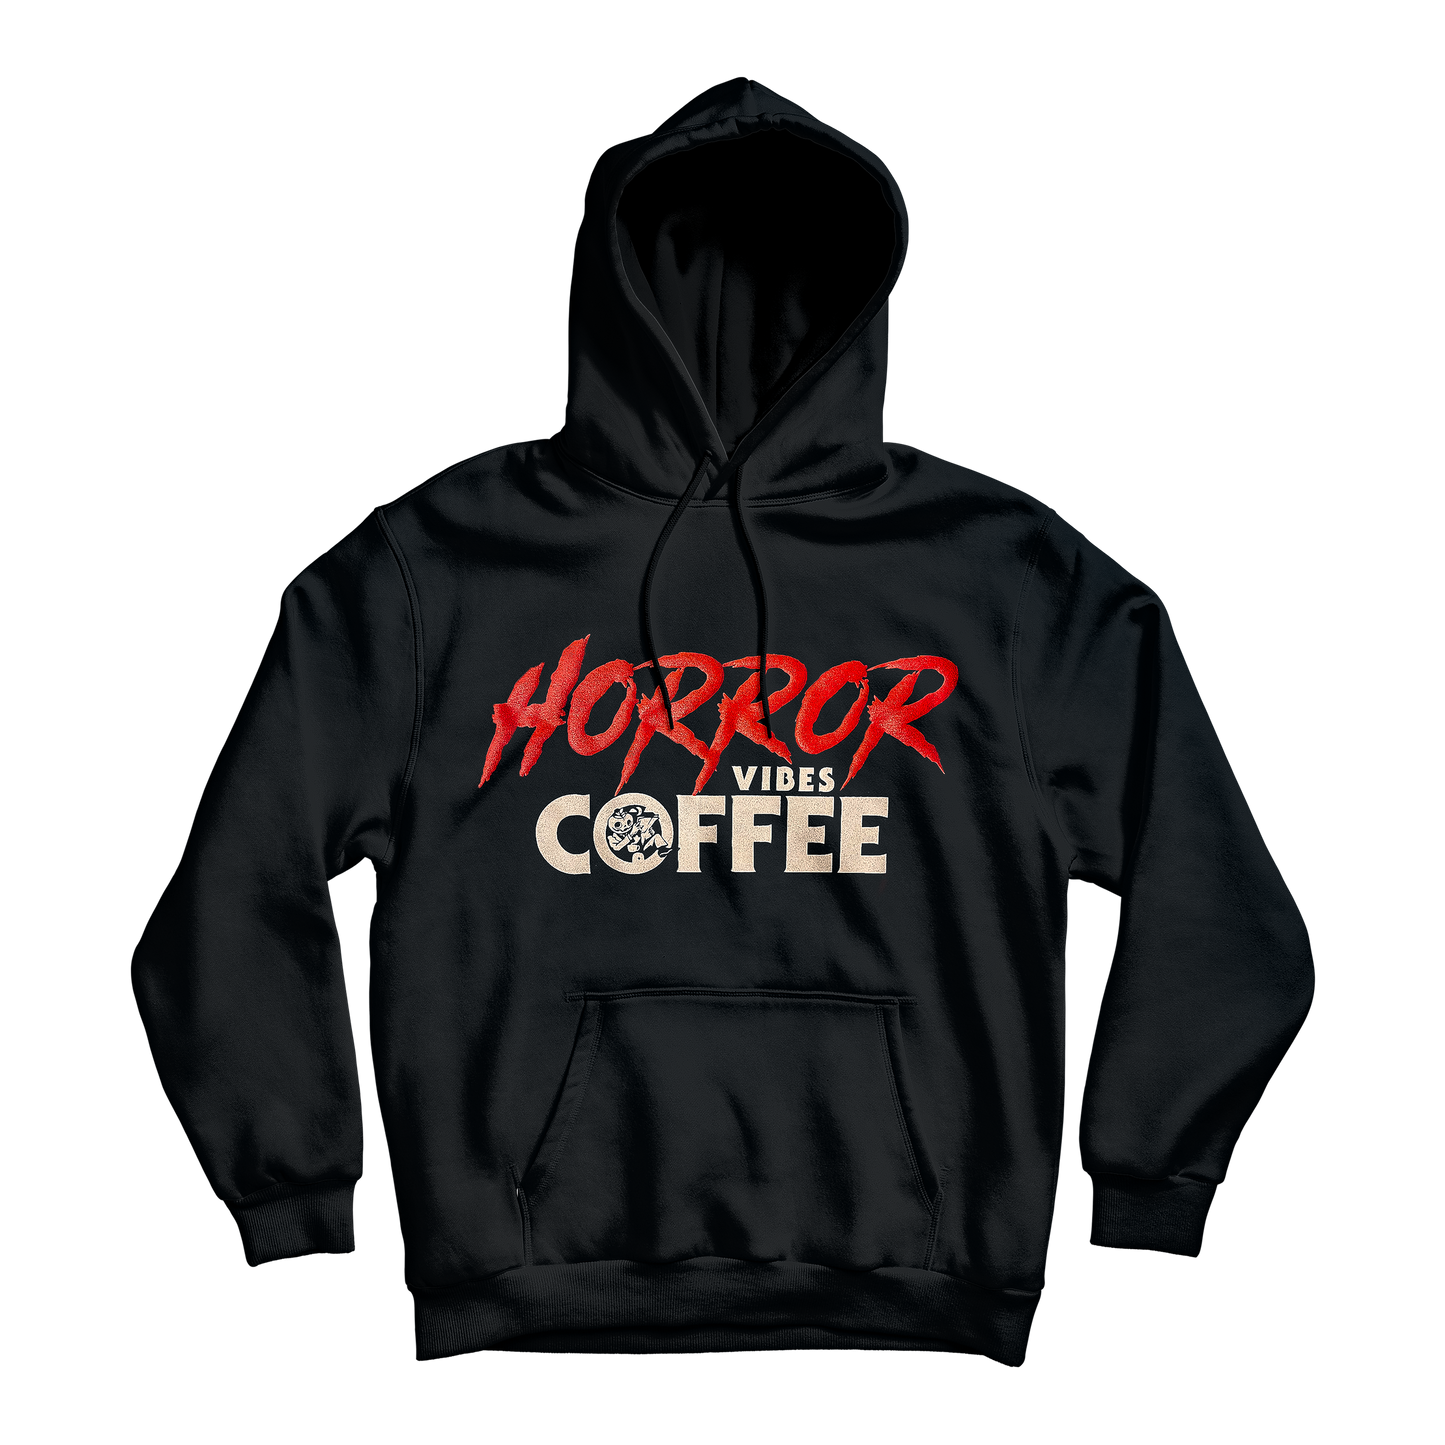 "HORROR VIBES COFFEE" sweatshirt